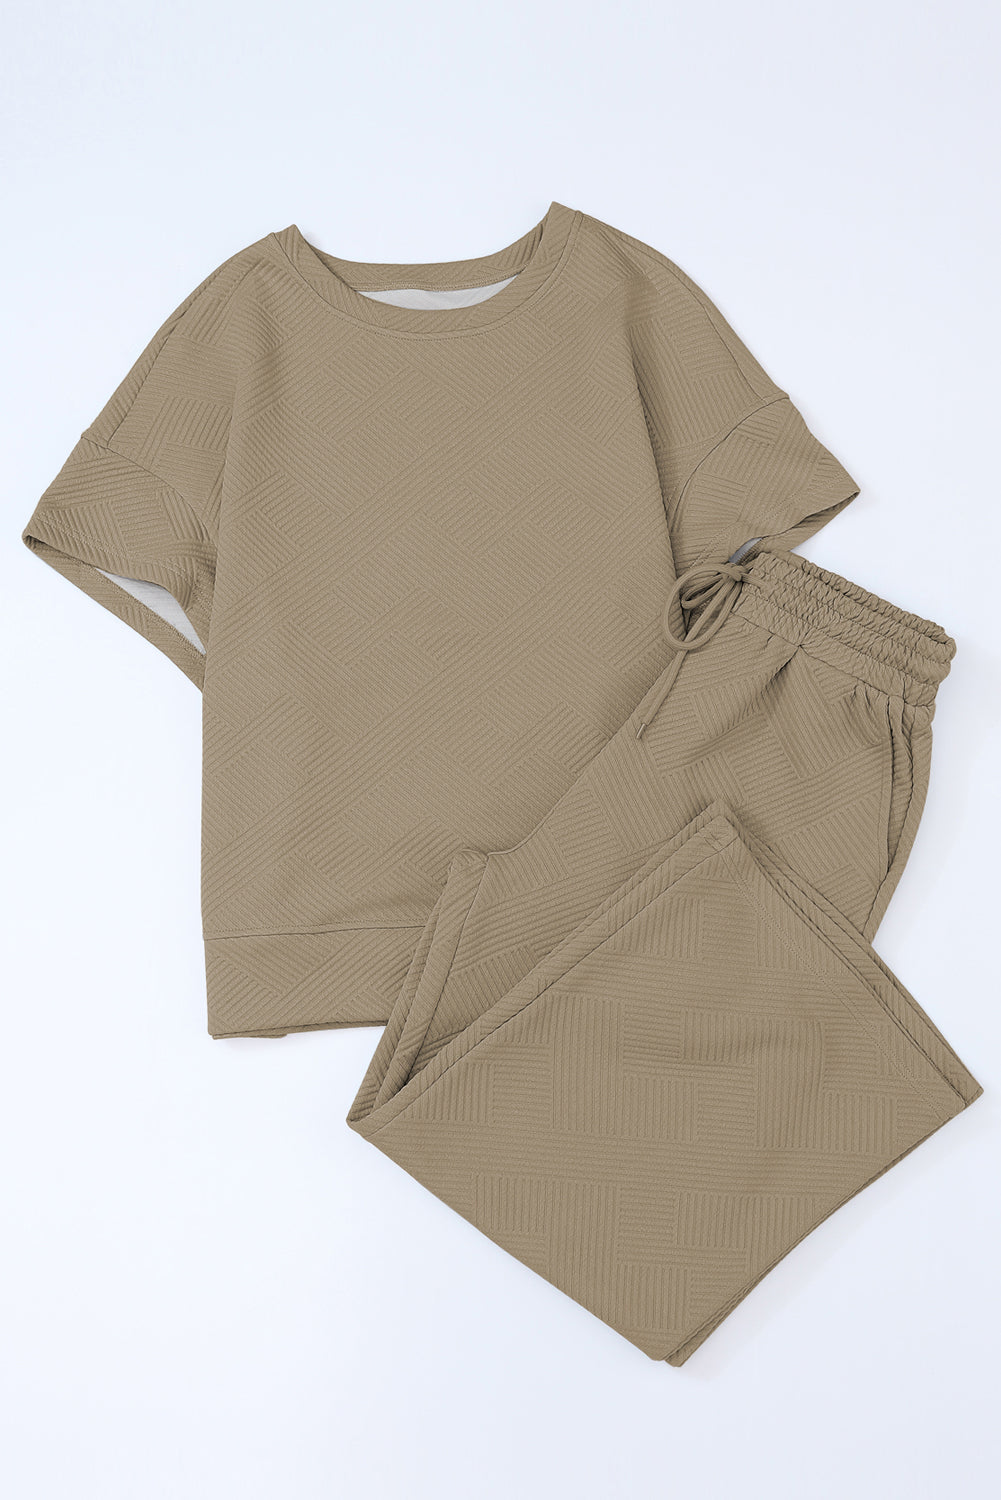 Stylish Pale Khaki Women's T-Shirt & Pants Set - Relaxed Fit